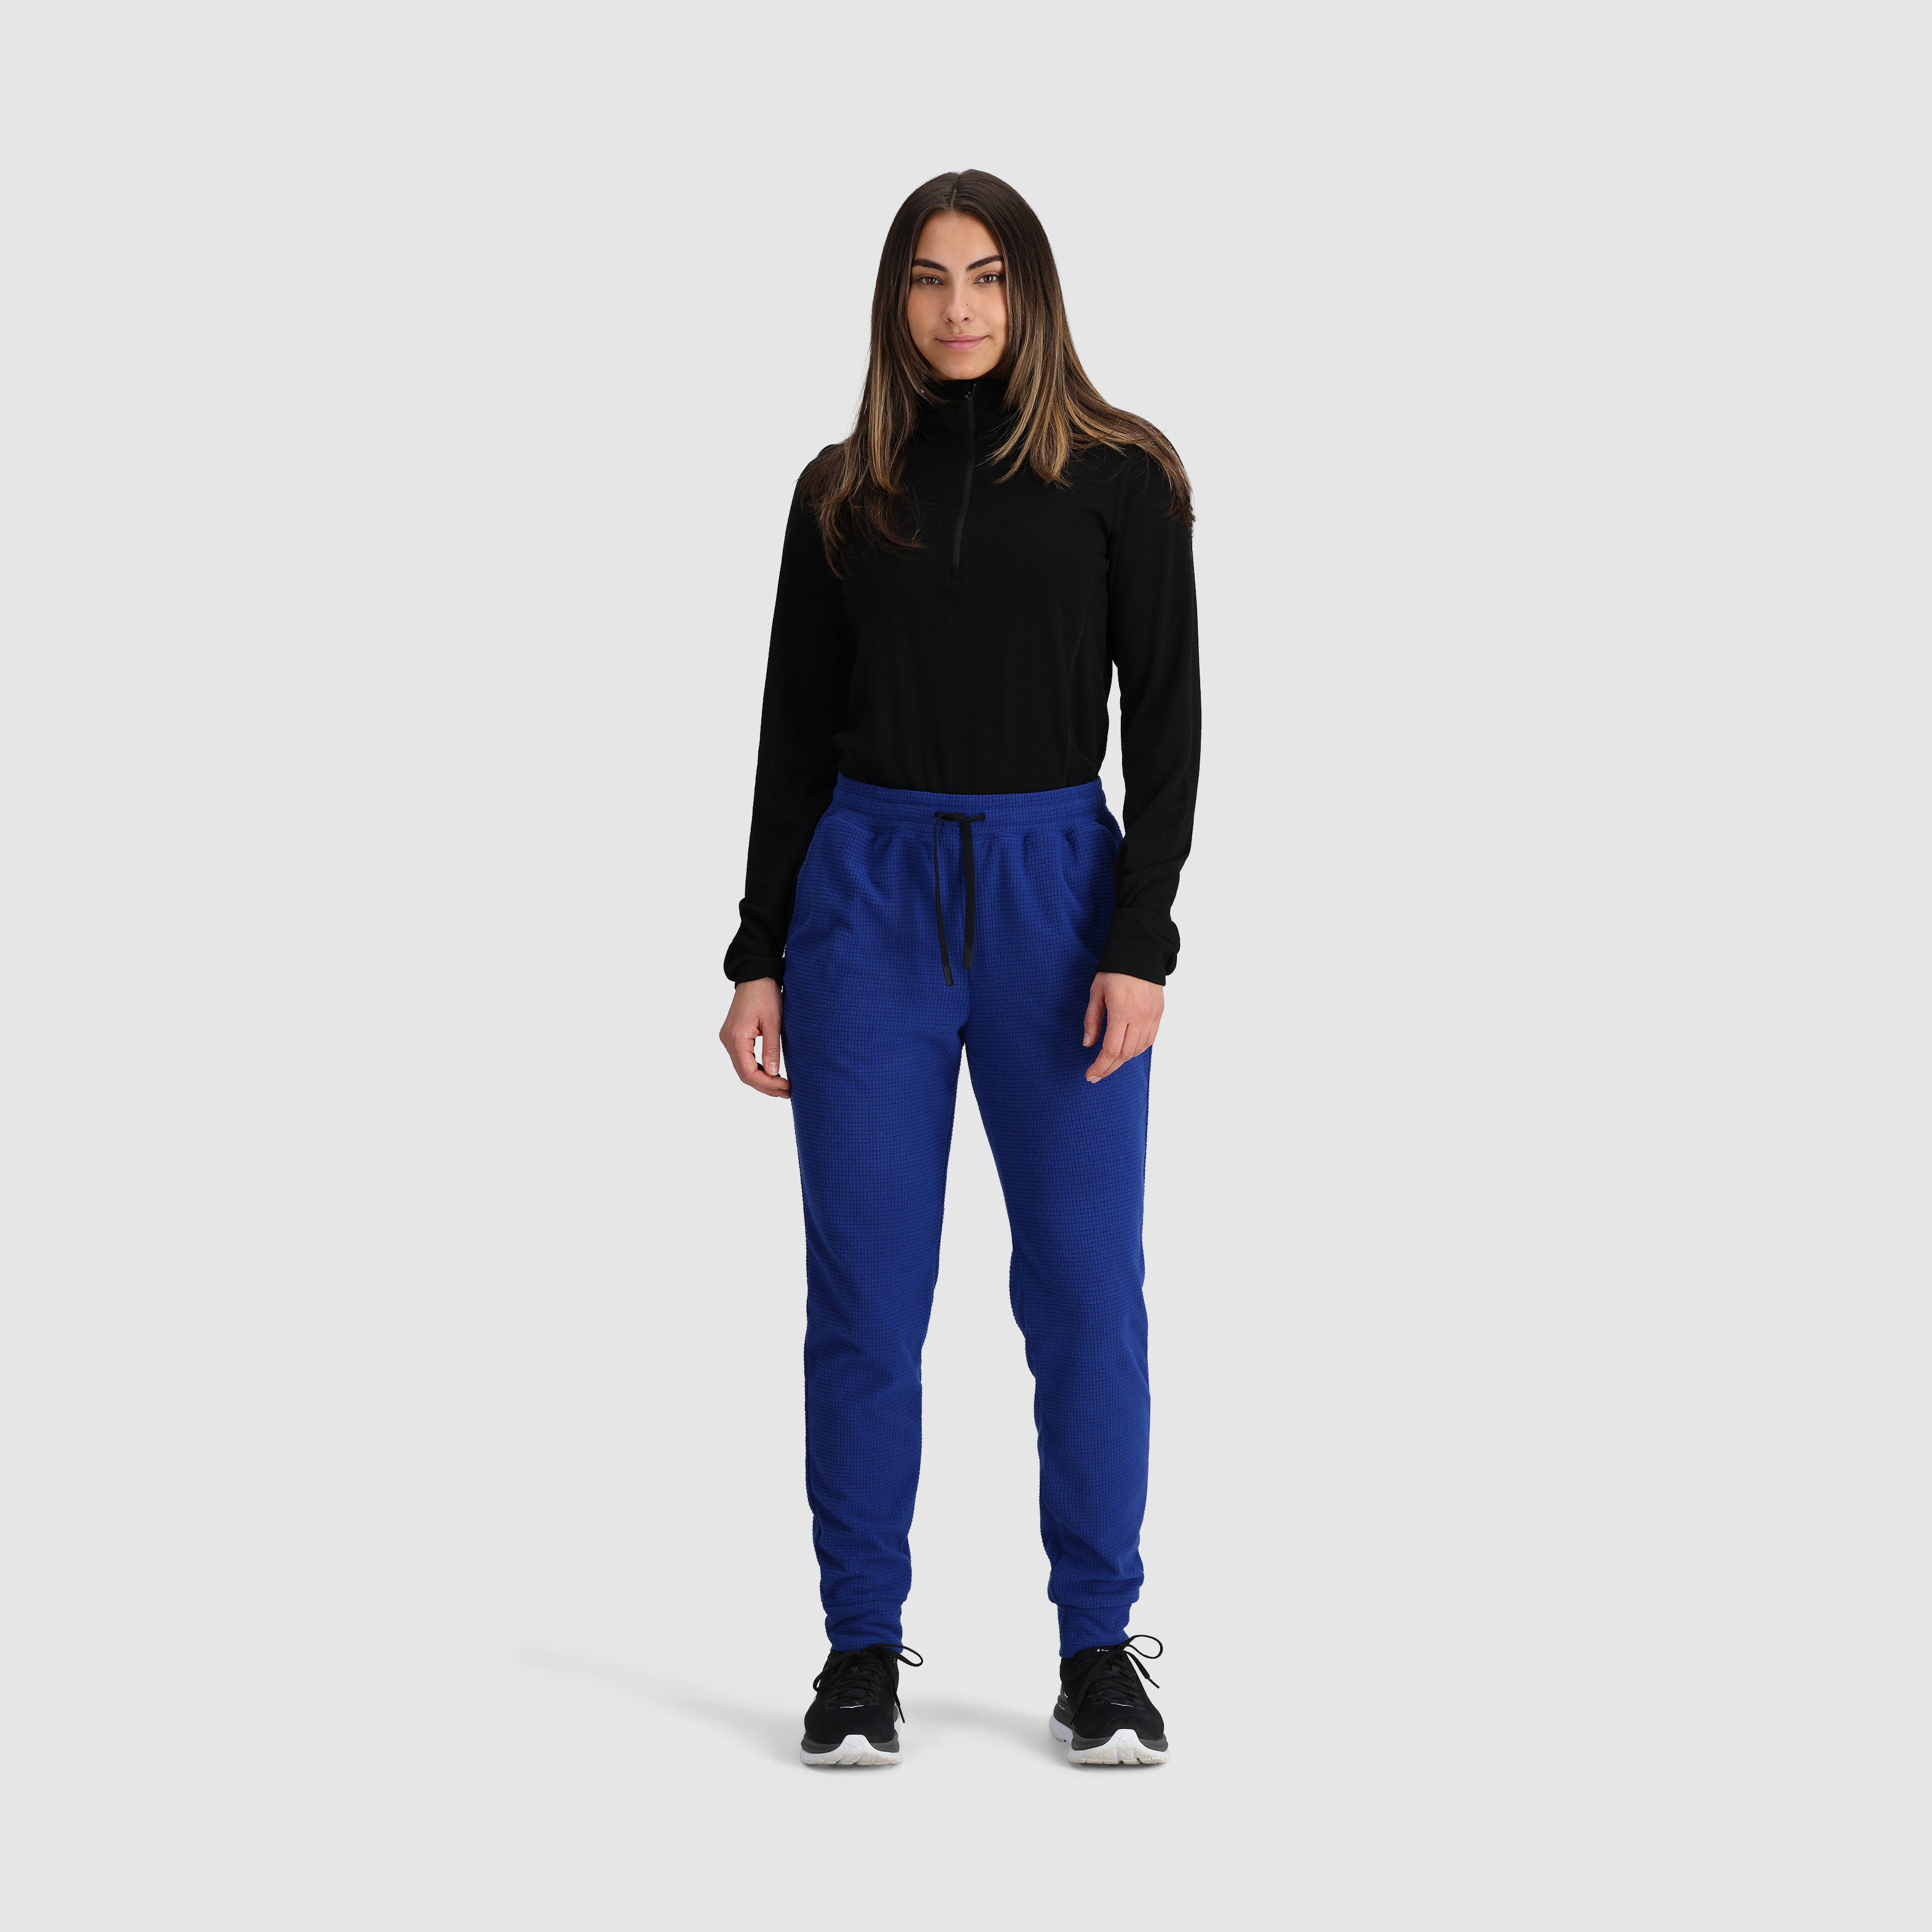 Shop Women's Joggers: Trendy & Comfortable Pants for Women